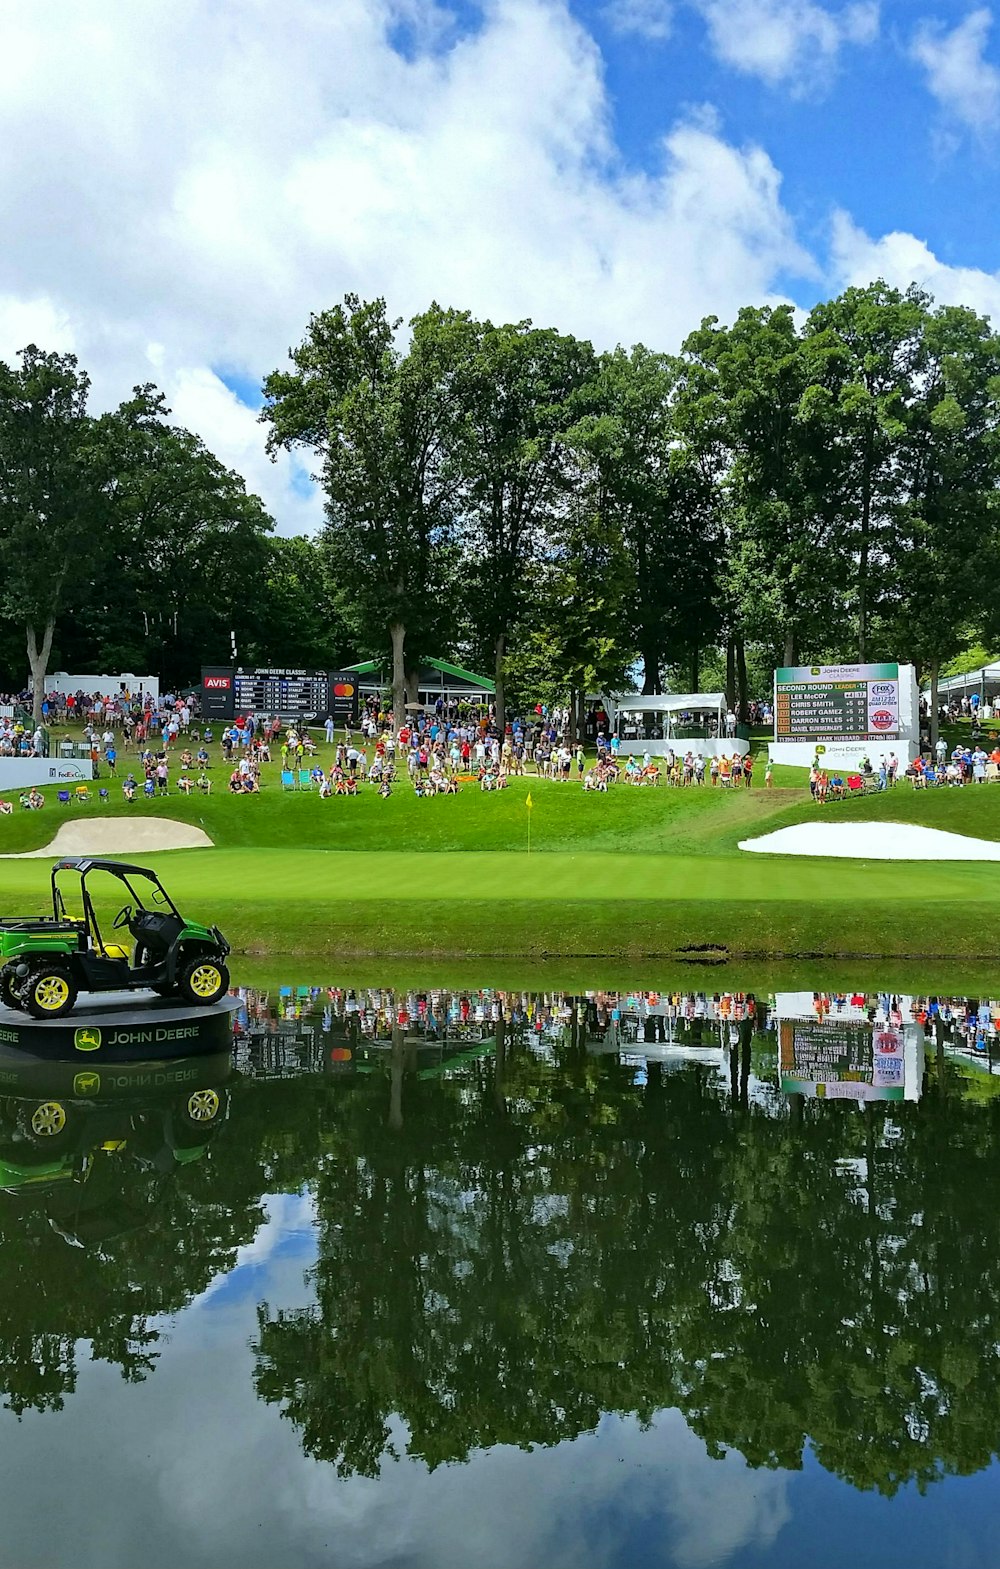 green golf cart on green grass field near body of water during daytime